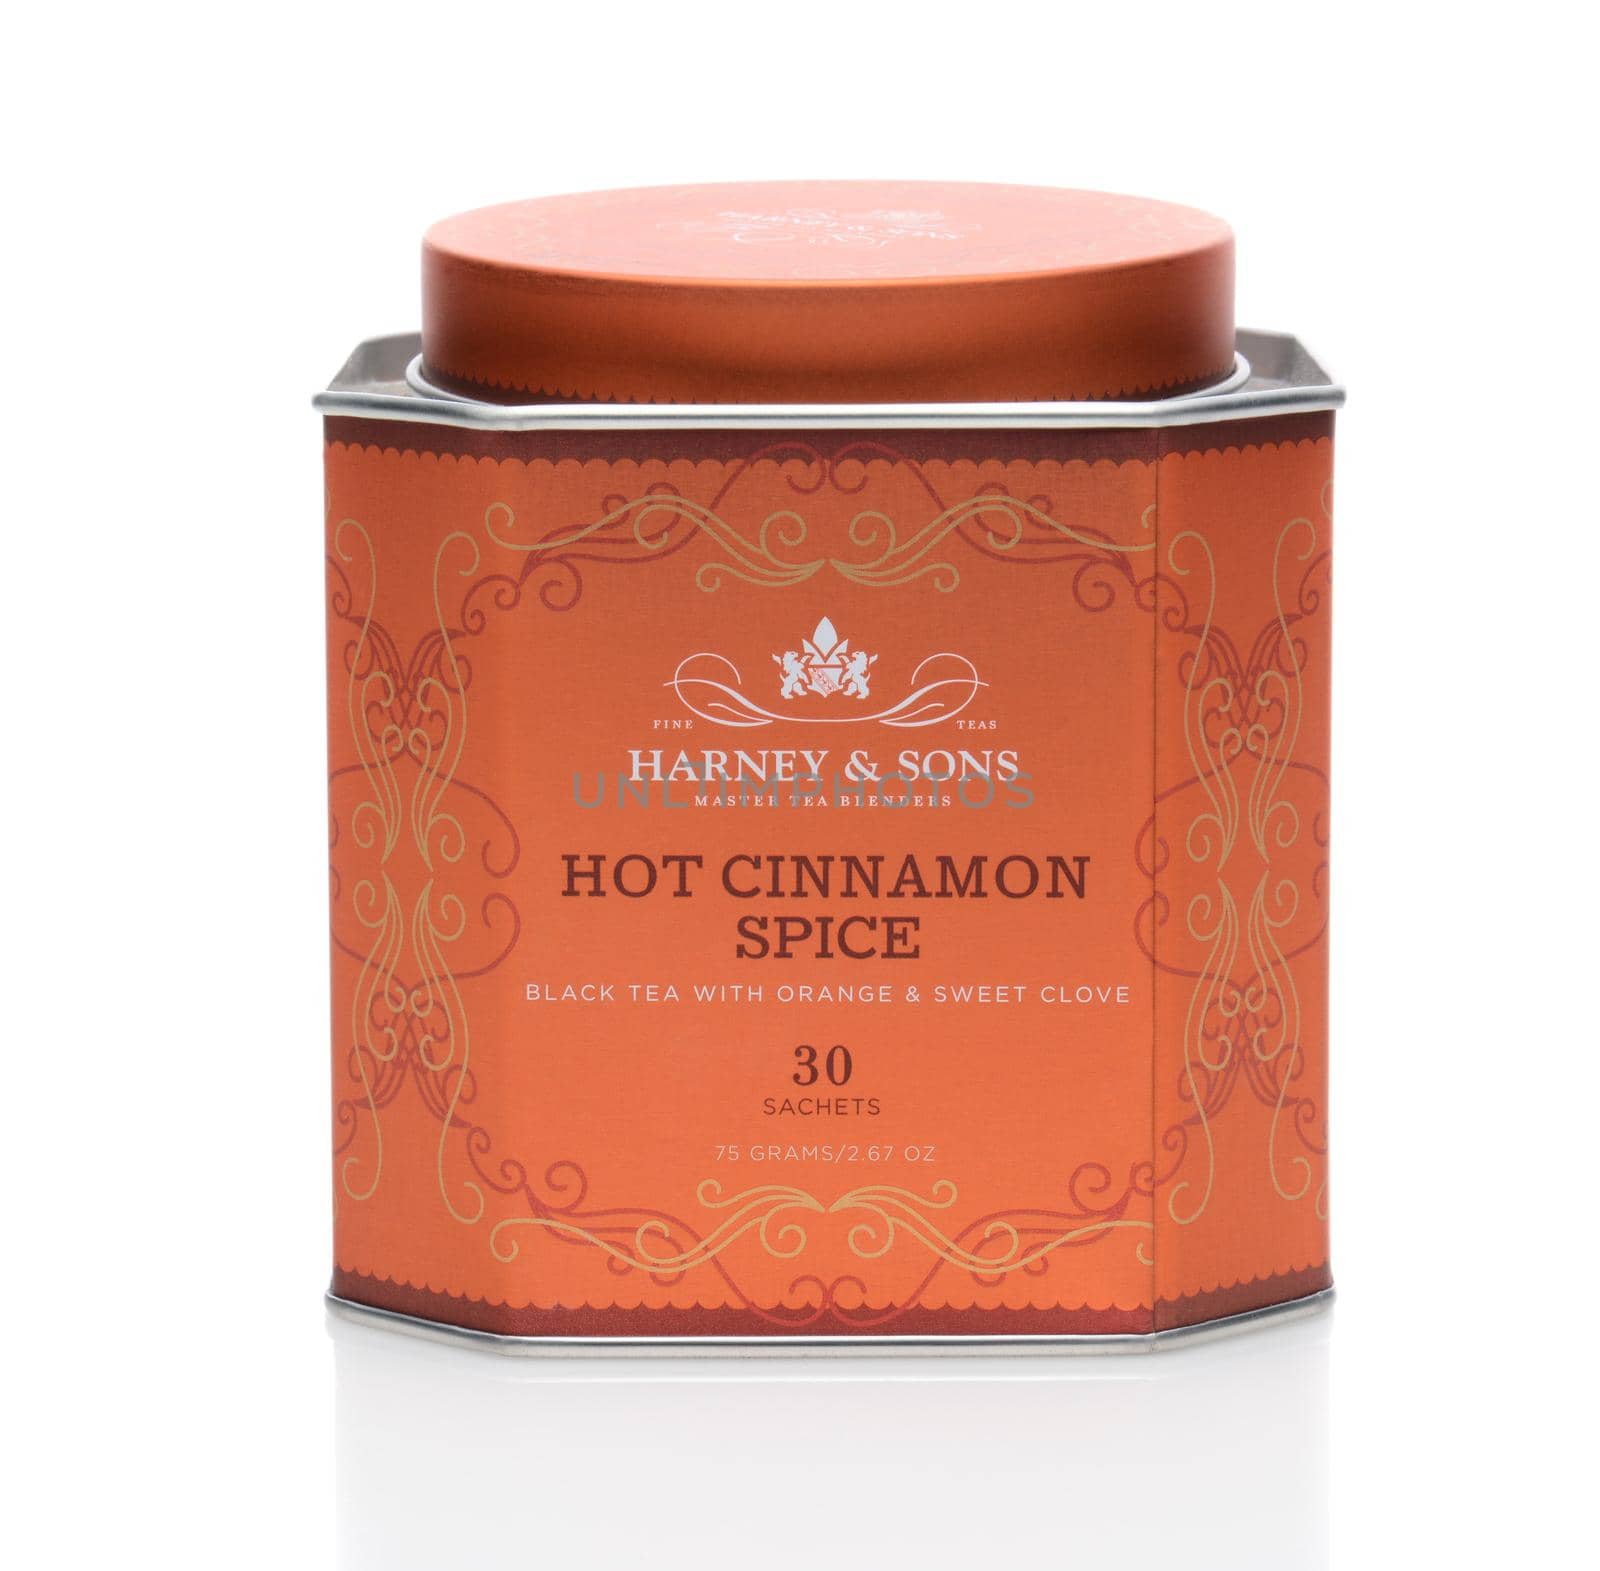 Harney & Sons Hot Cinnamon Spice Tea by sCukrov